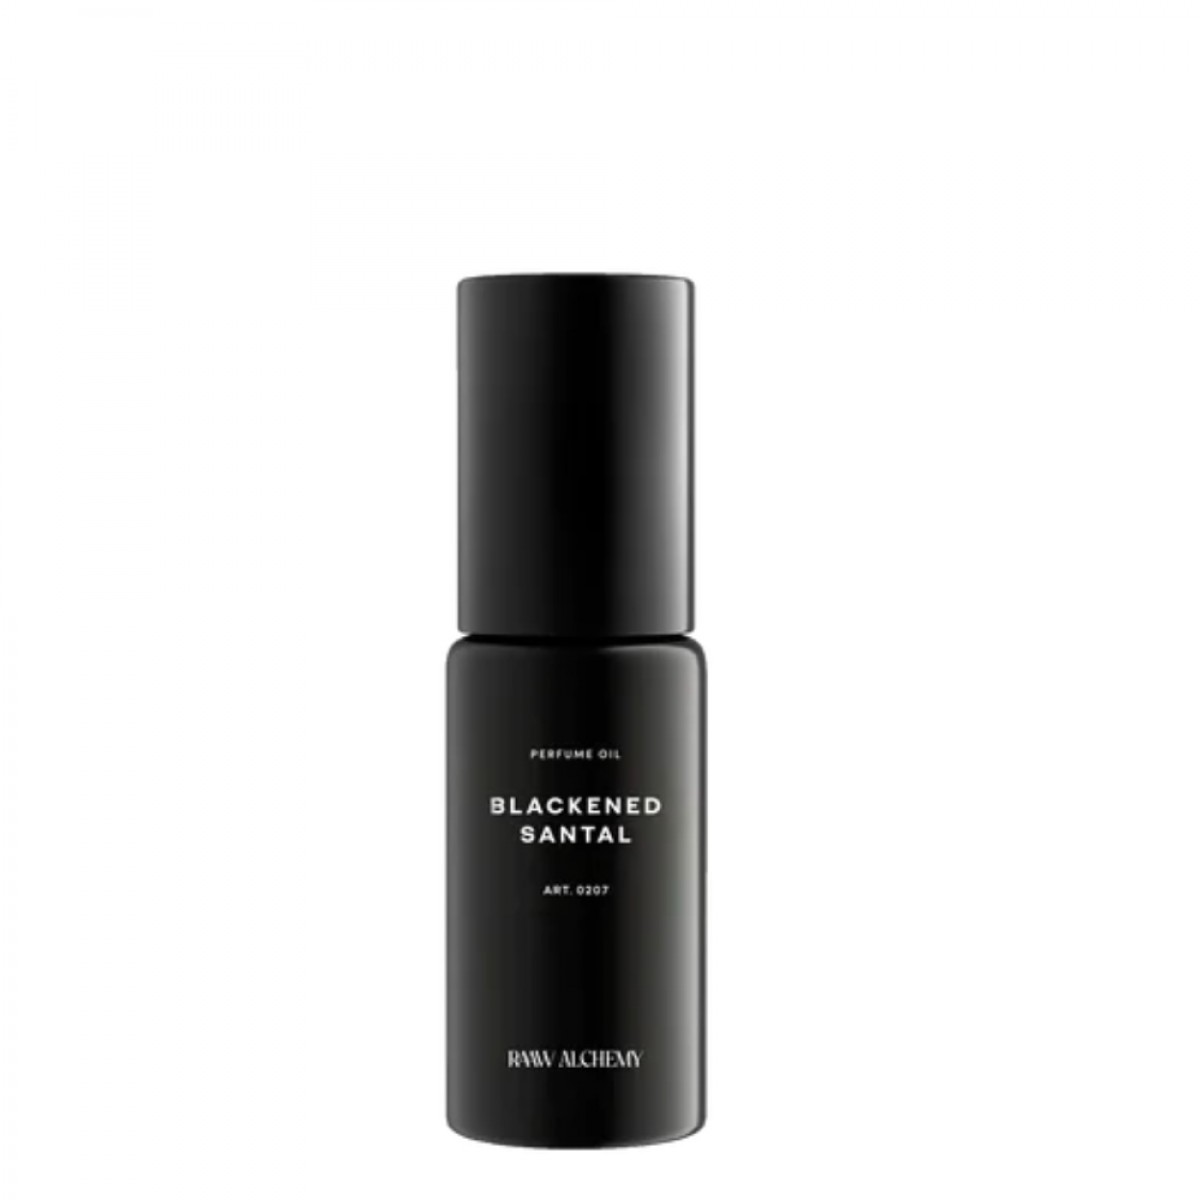 blackened santal perfume oil - front